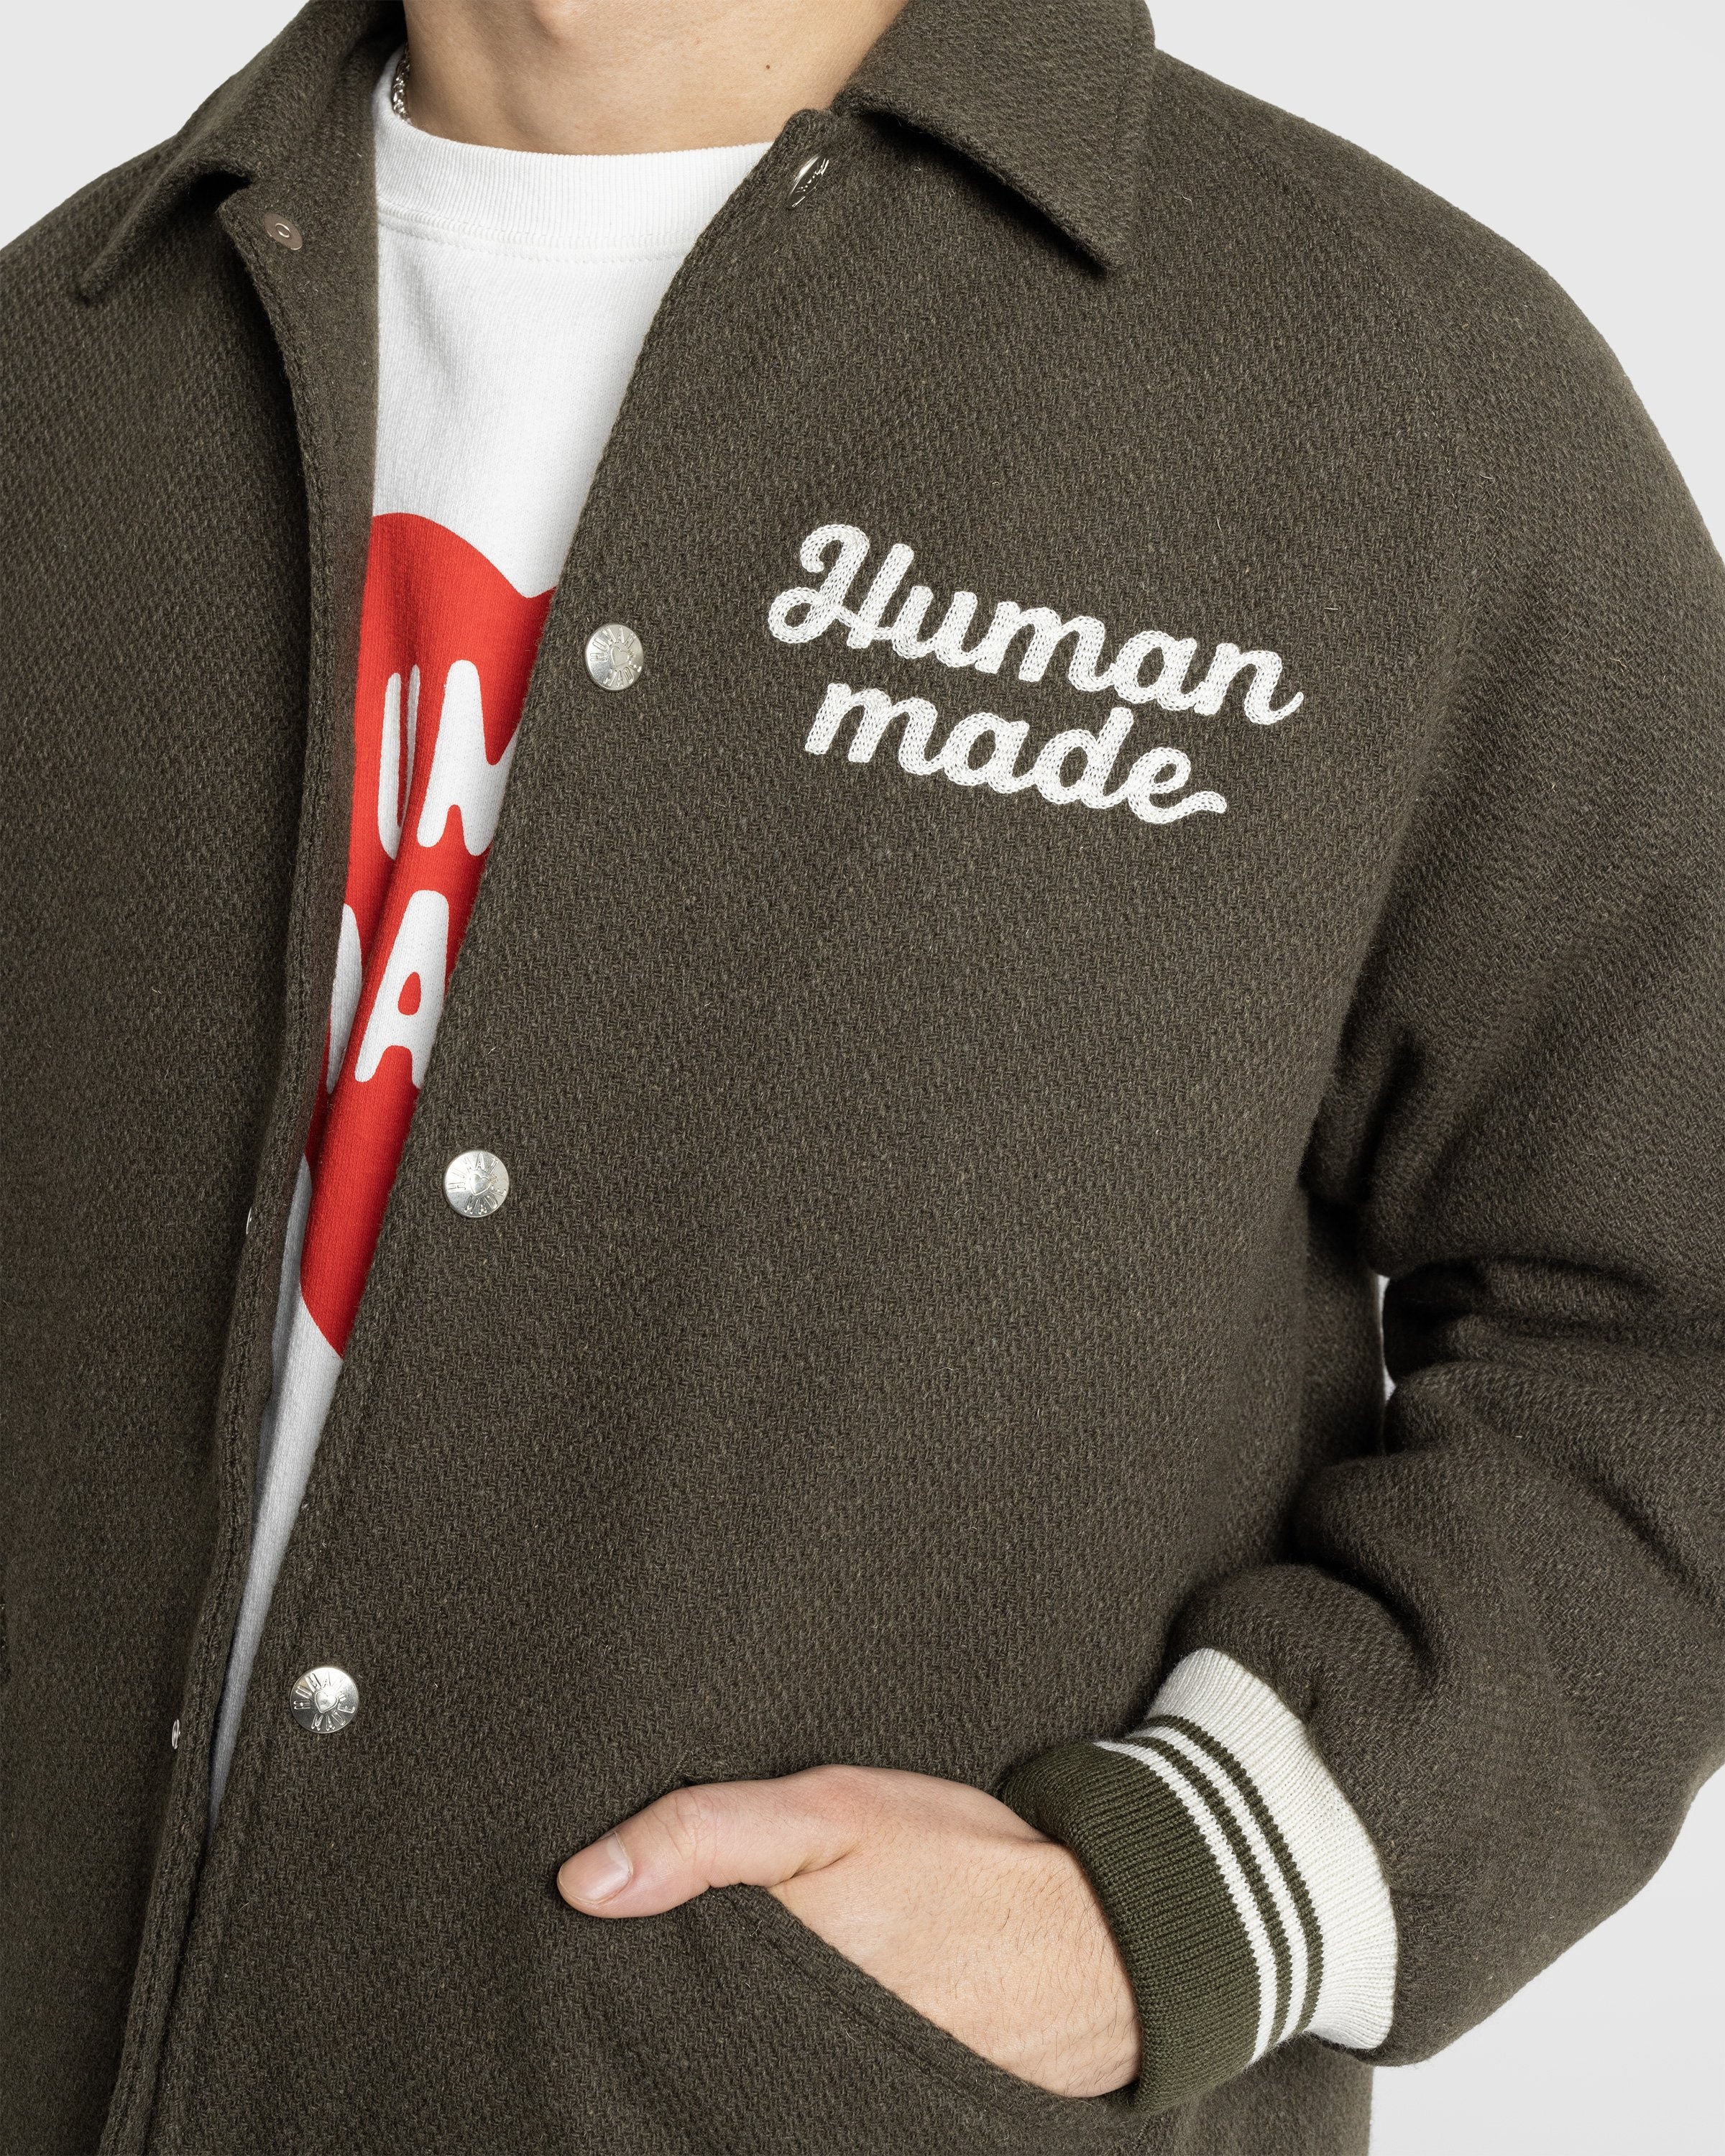 Human Made – Stadium Jacket Olive Drab | Highsnobiety Shop